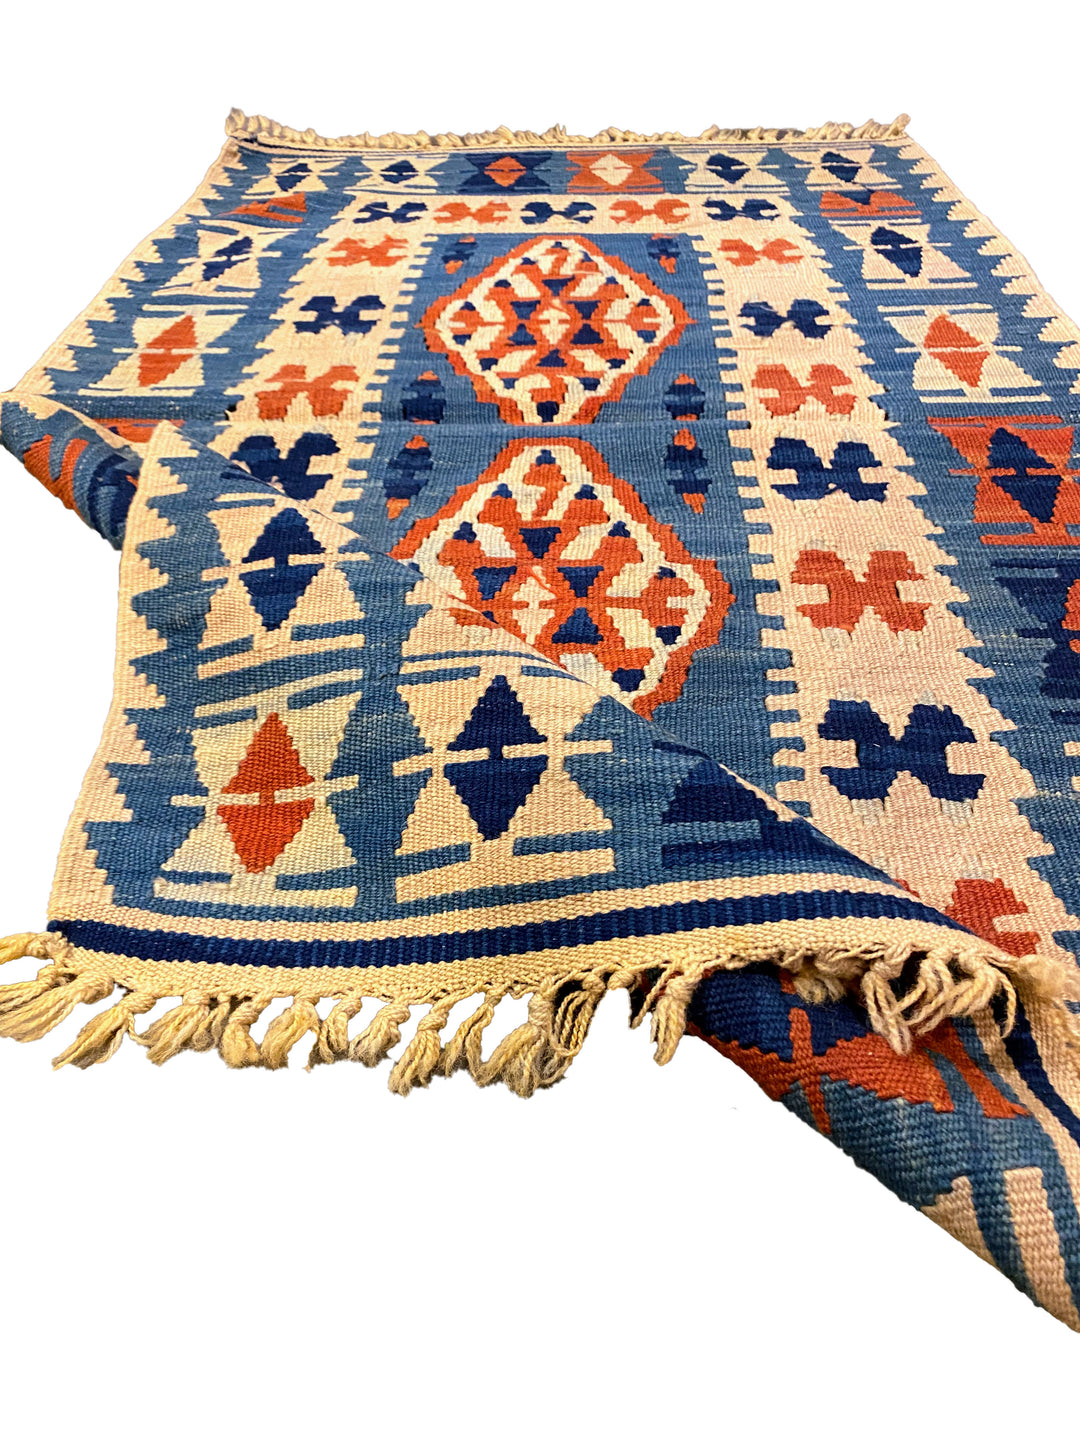 Atca - Size: 3.8 x 2.3 - Imam Carpet Co